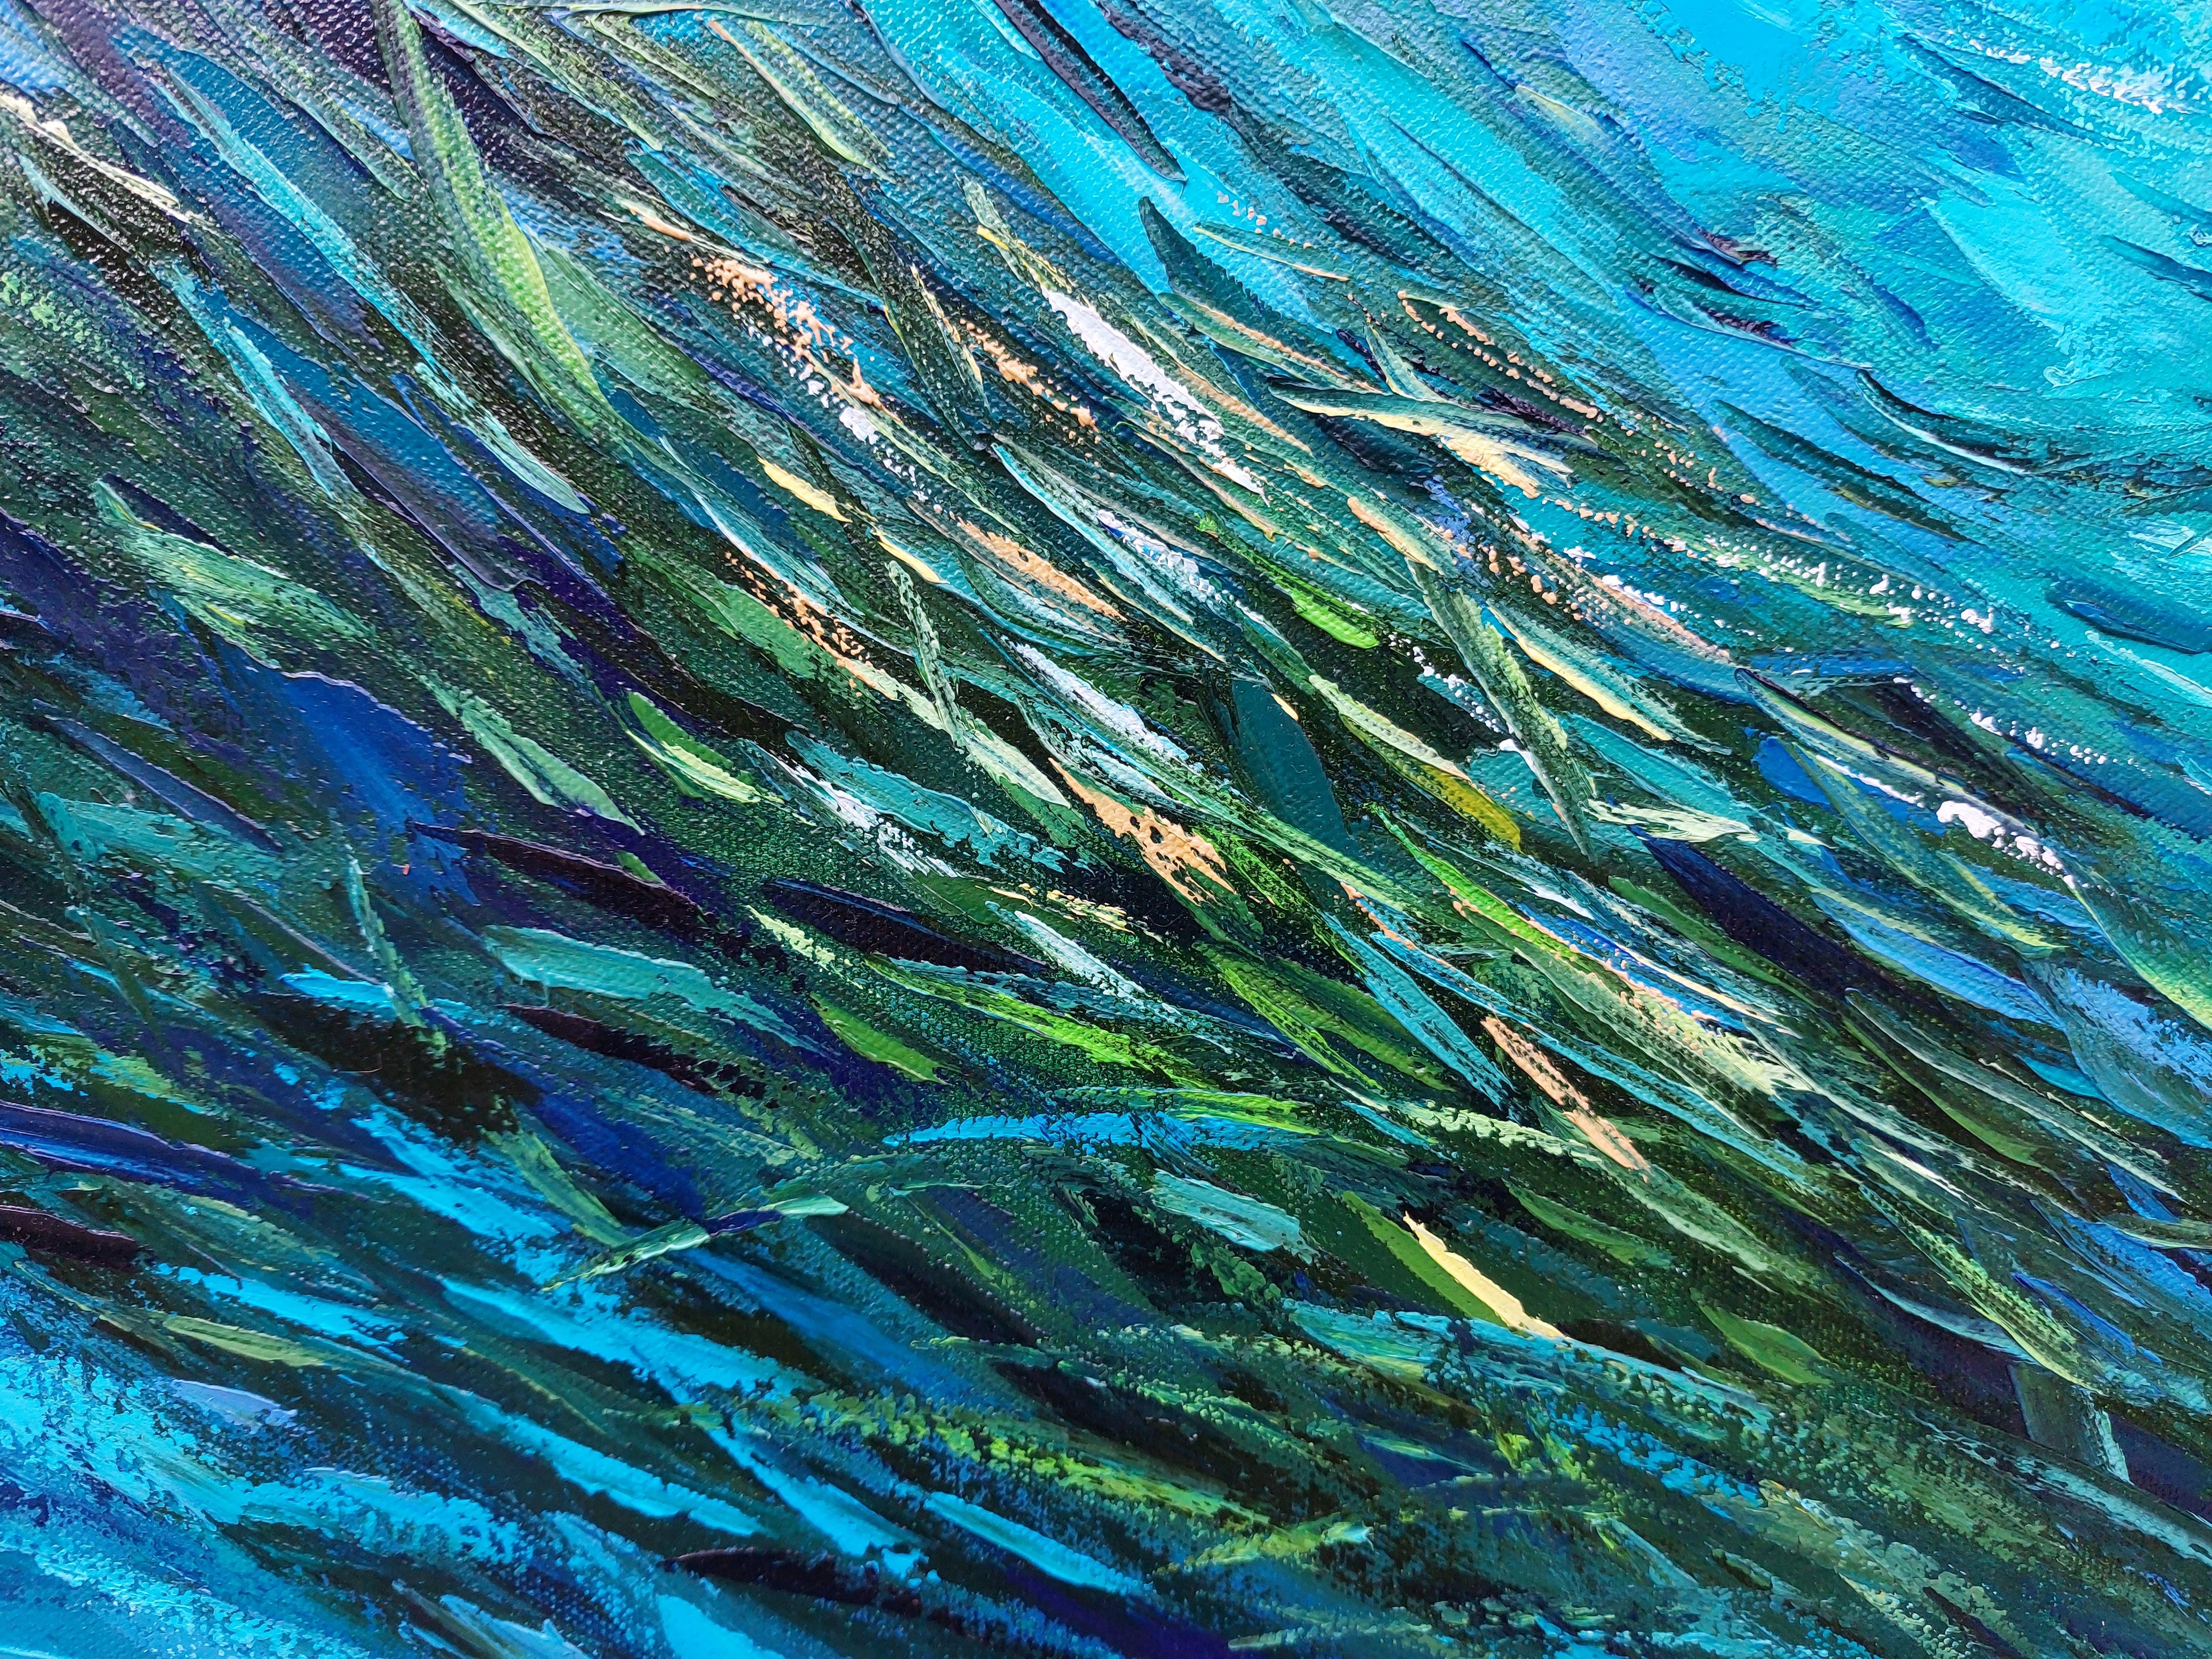 École de poissons Sardines Stream - Expressionnisme abstrait Painting par Olga Nikitina